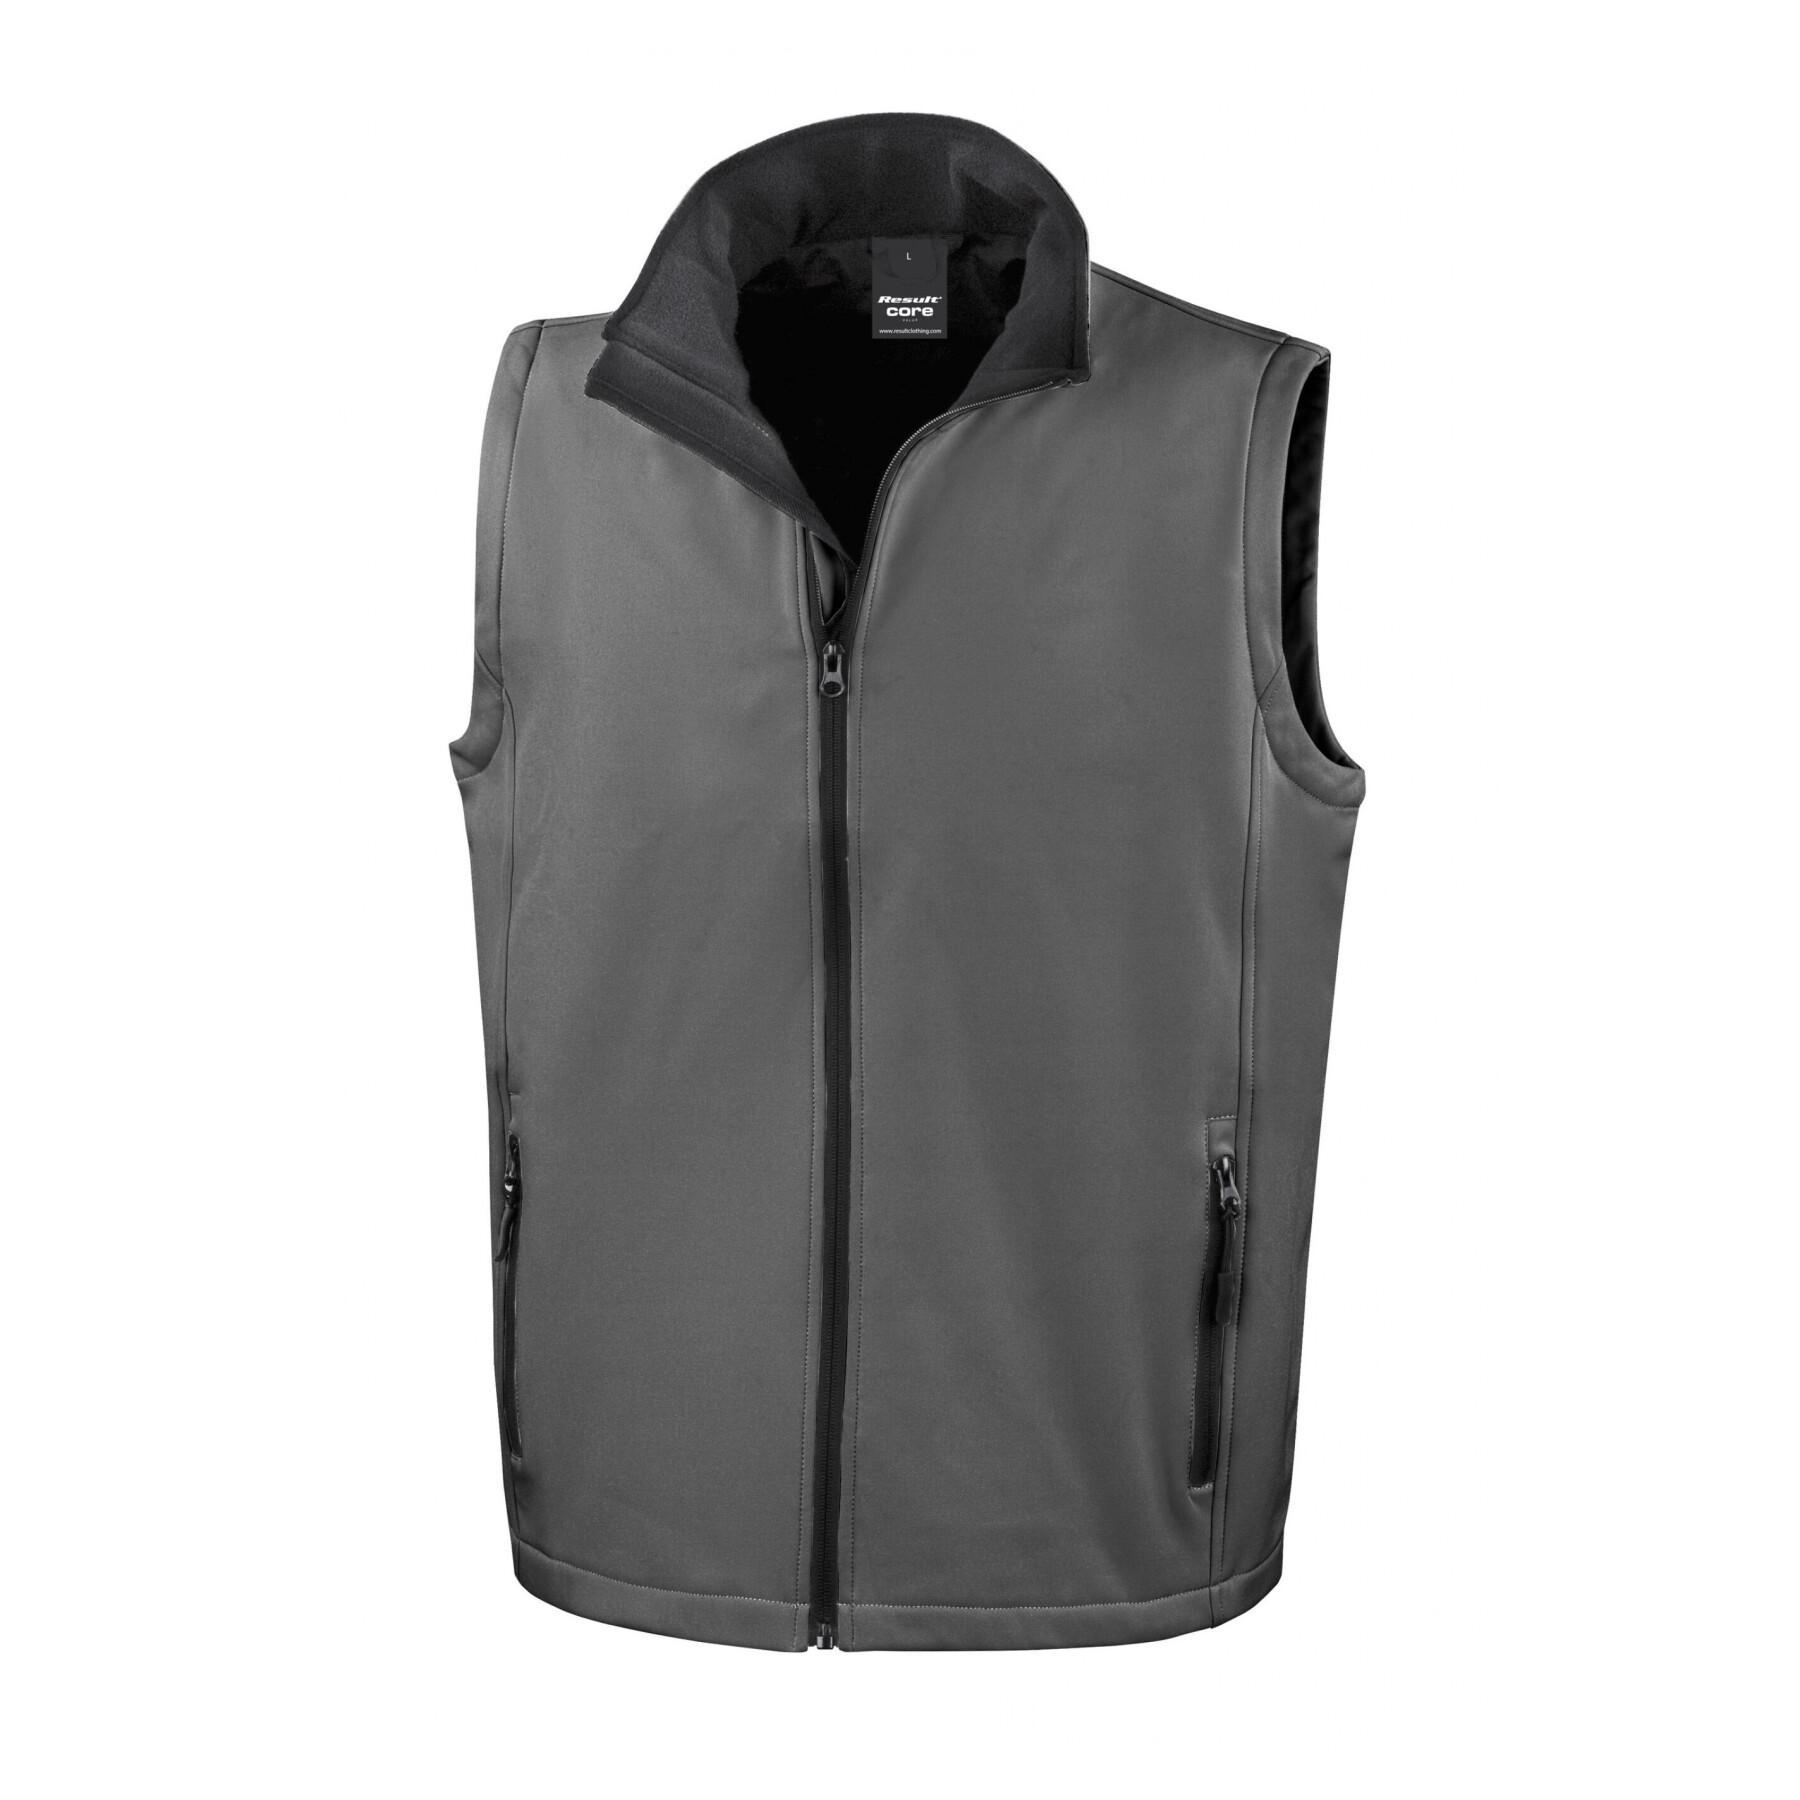 Printable sleeveless jacket Result Softshell